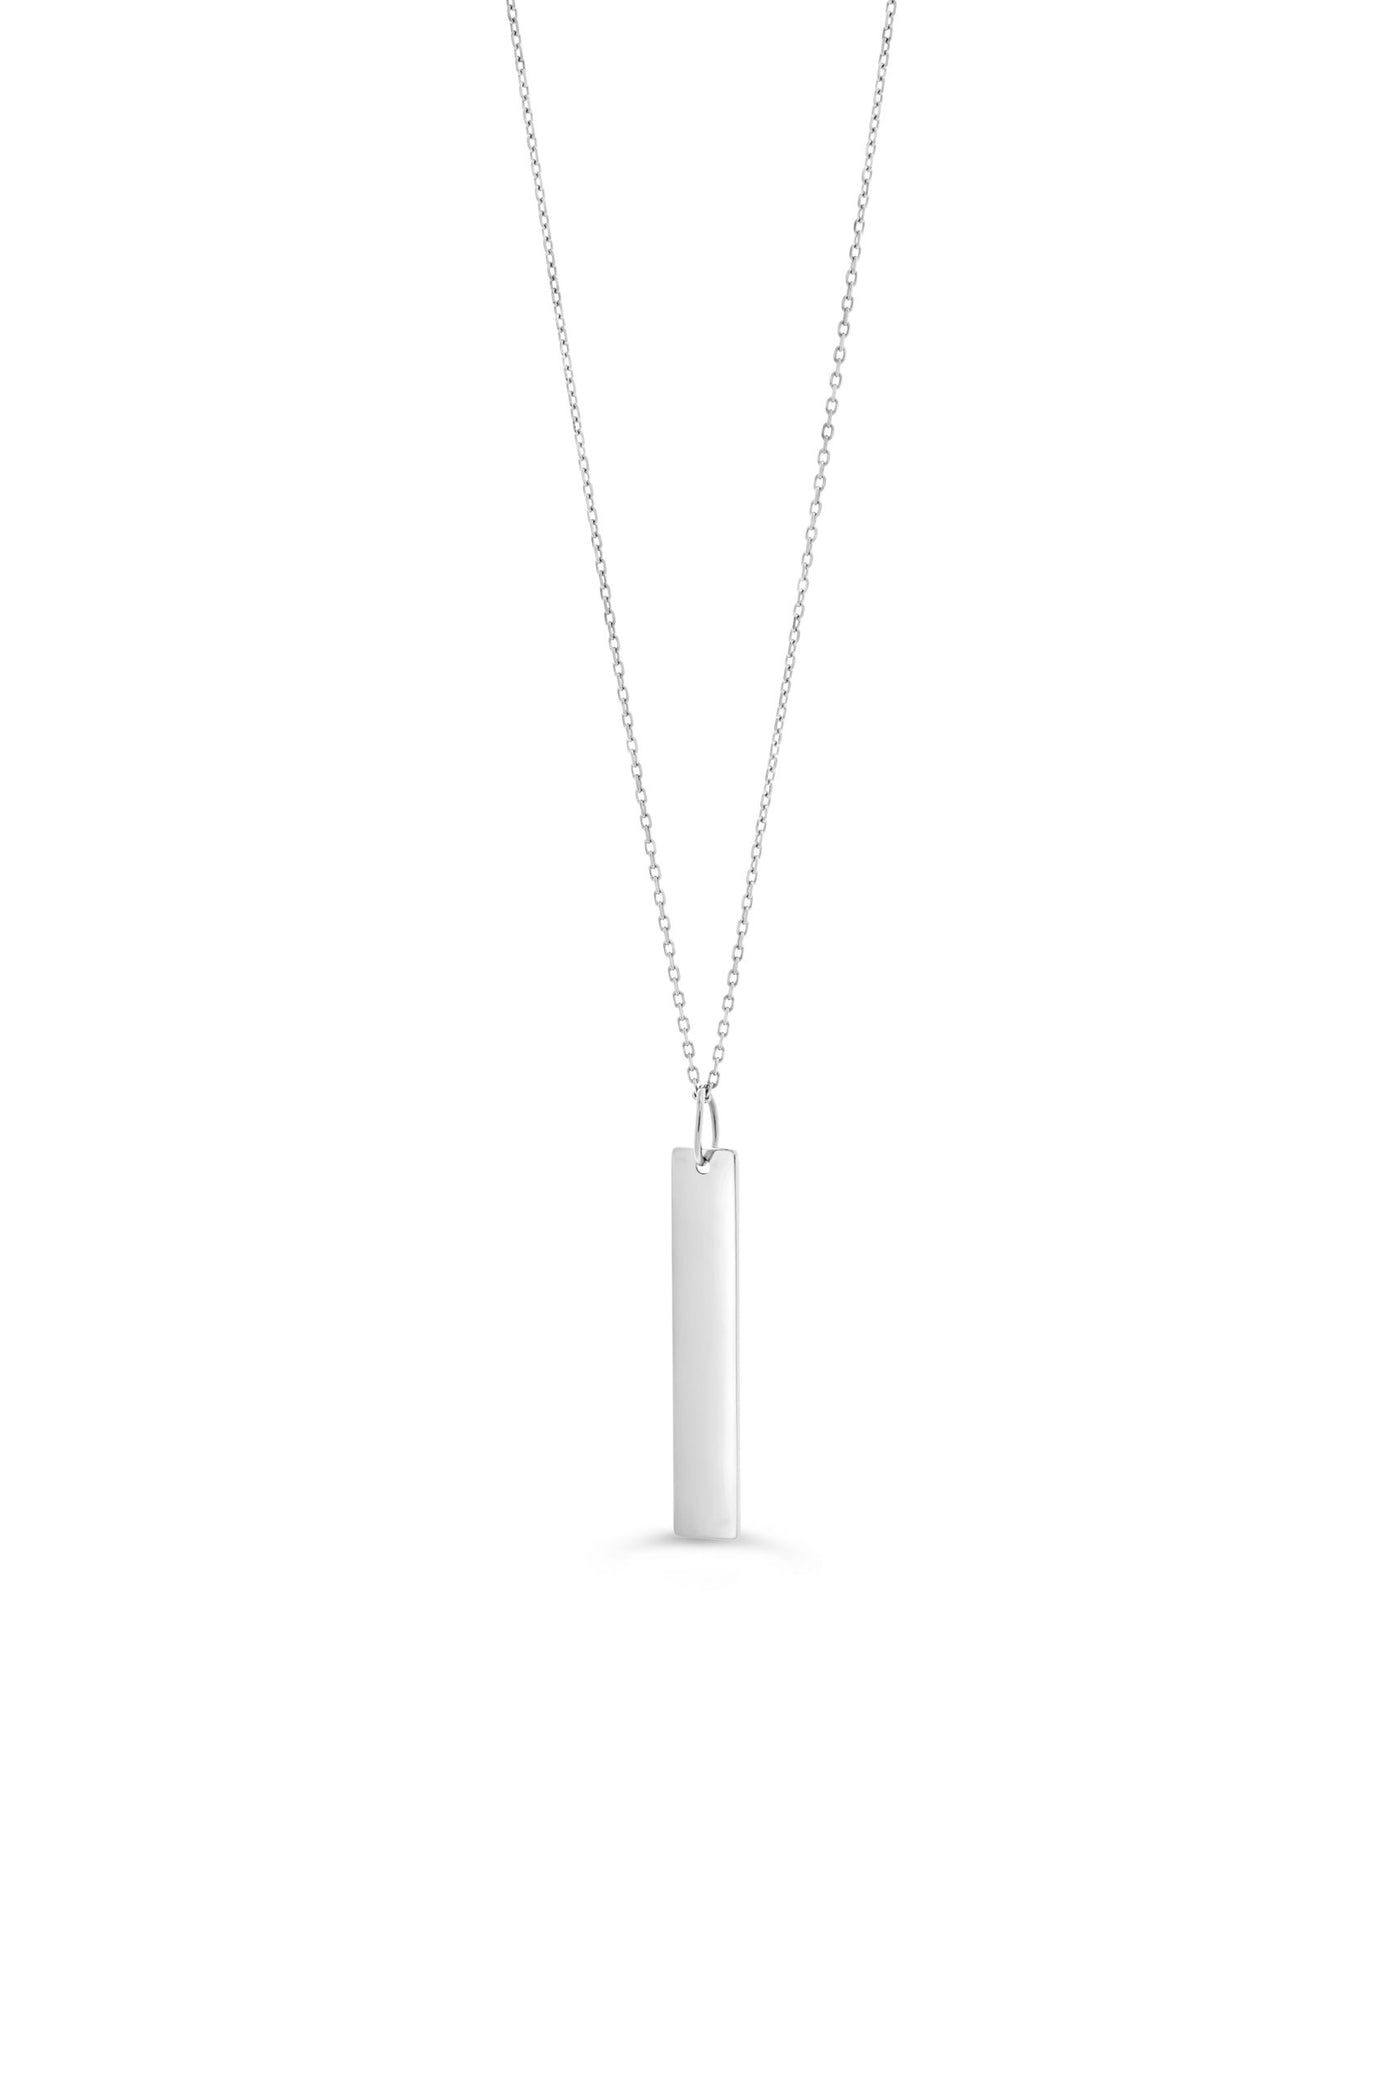 10 Karat White Gold Vertical Bar Necklace